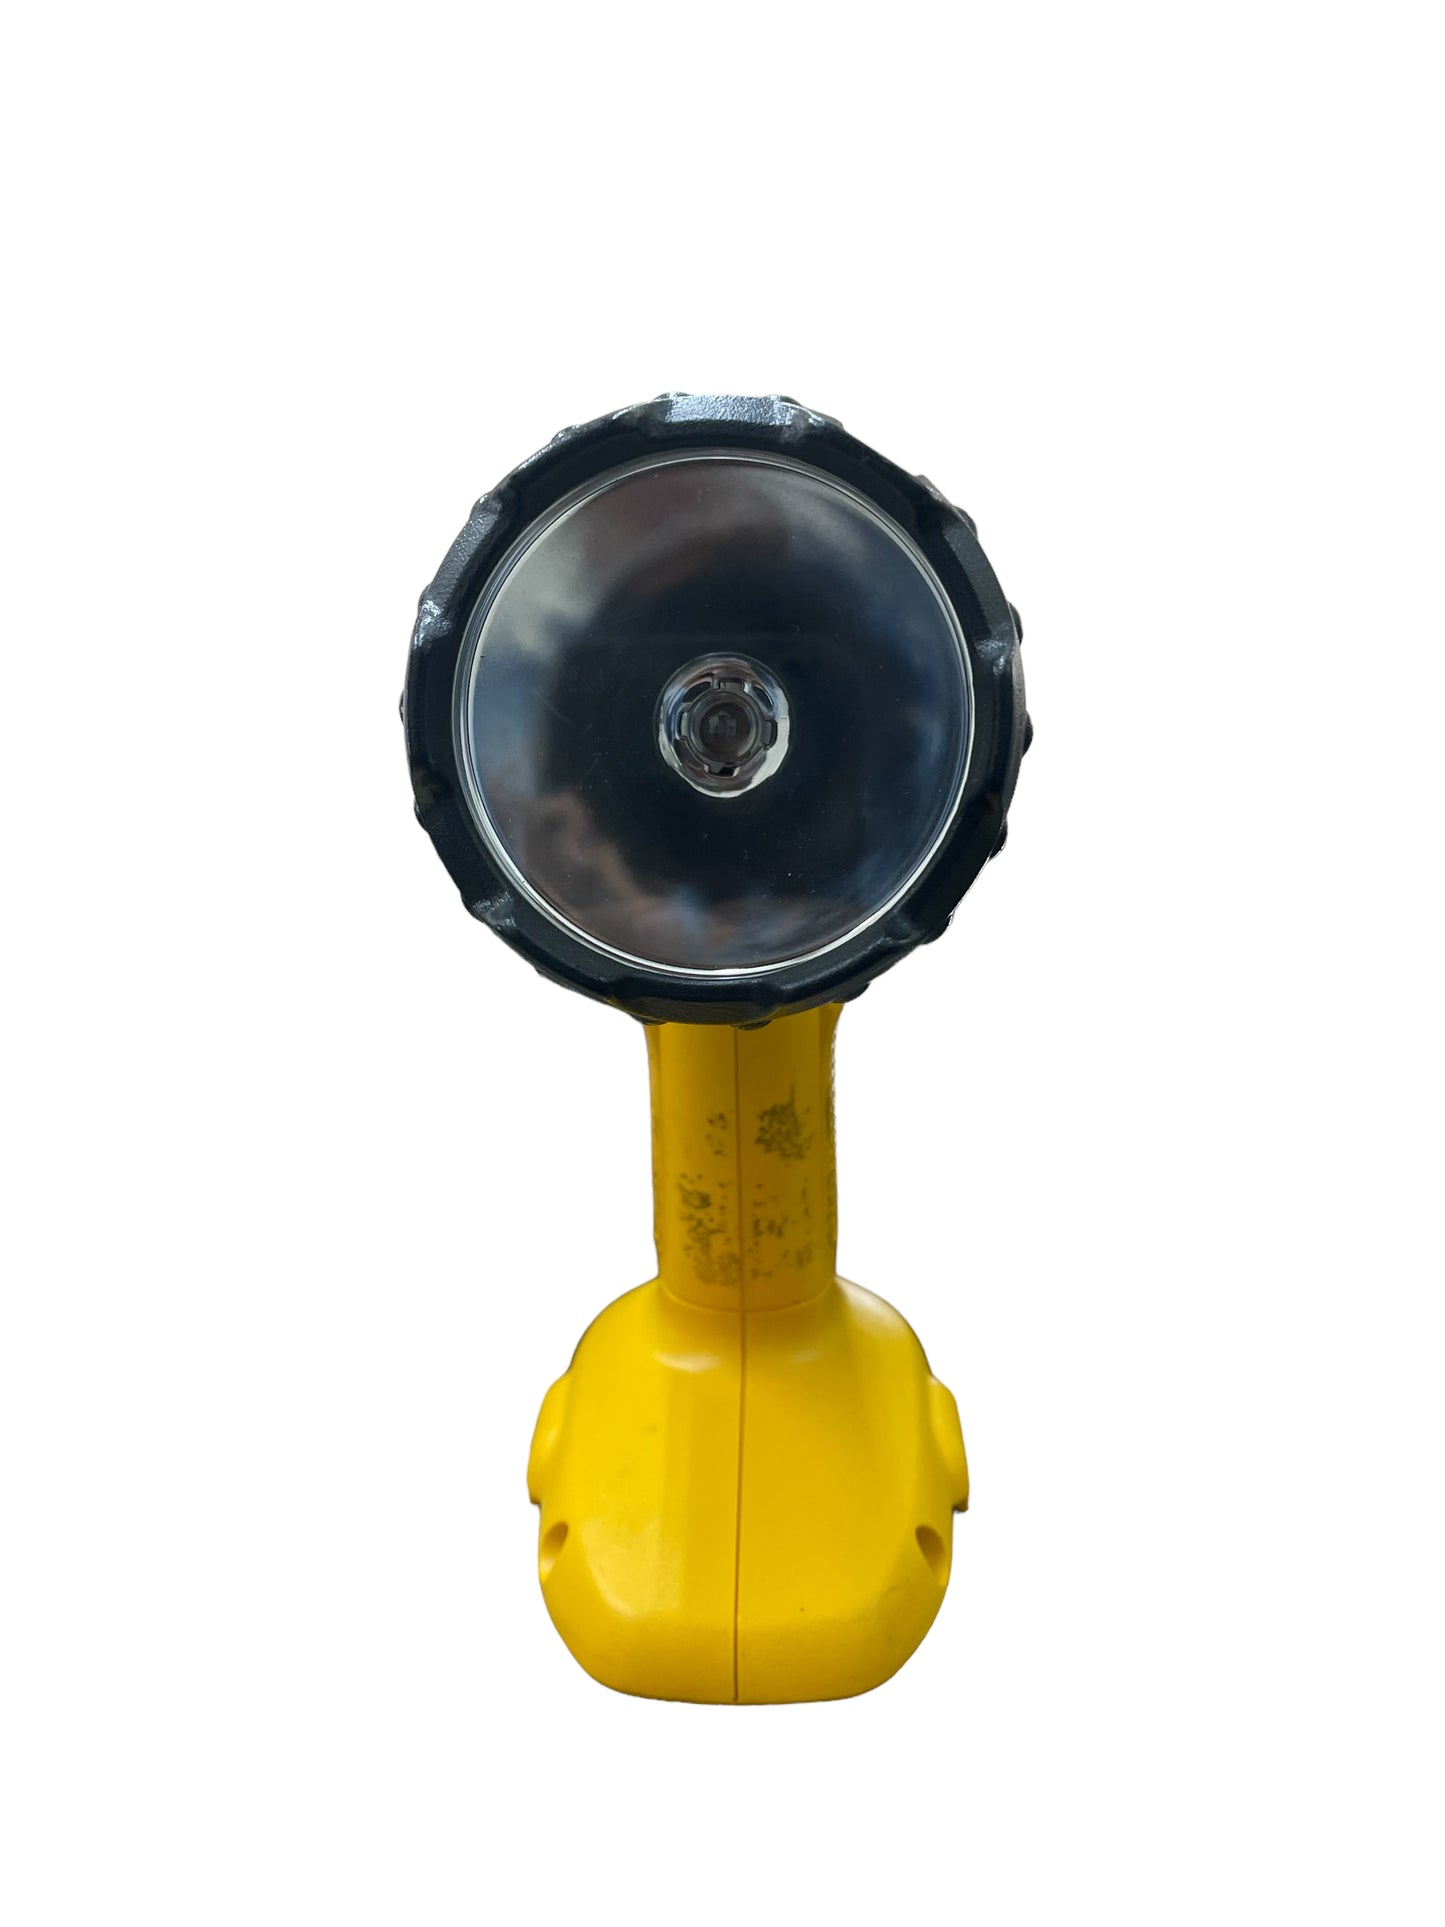 Dewalt DW908 Rechargeable Flashlight